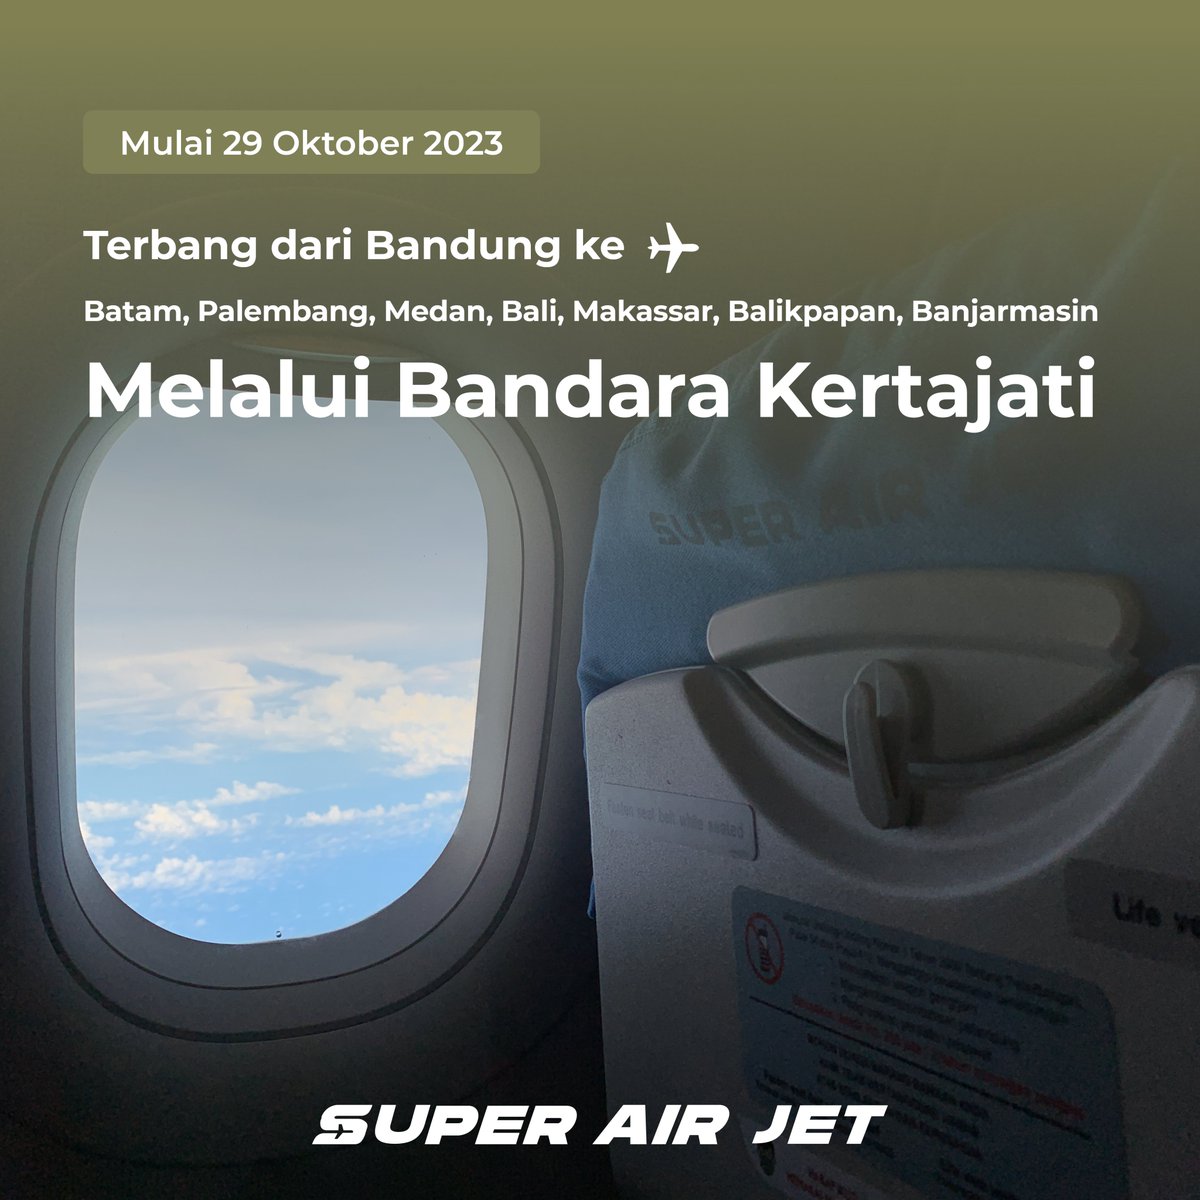 Punya rencana terbang dari/ke Bandung? Mulai 29 Oktober nanti, penerbangan #SuperAirJet melalui Bandara Kertajati ya, Supers. Sampai jumpa di penerbangan!